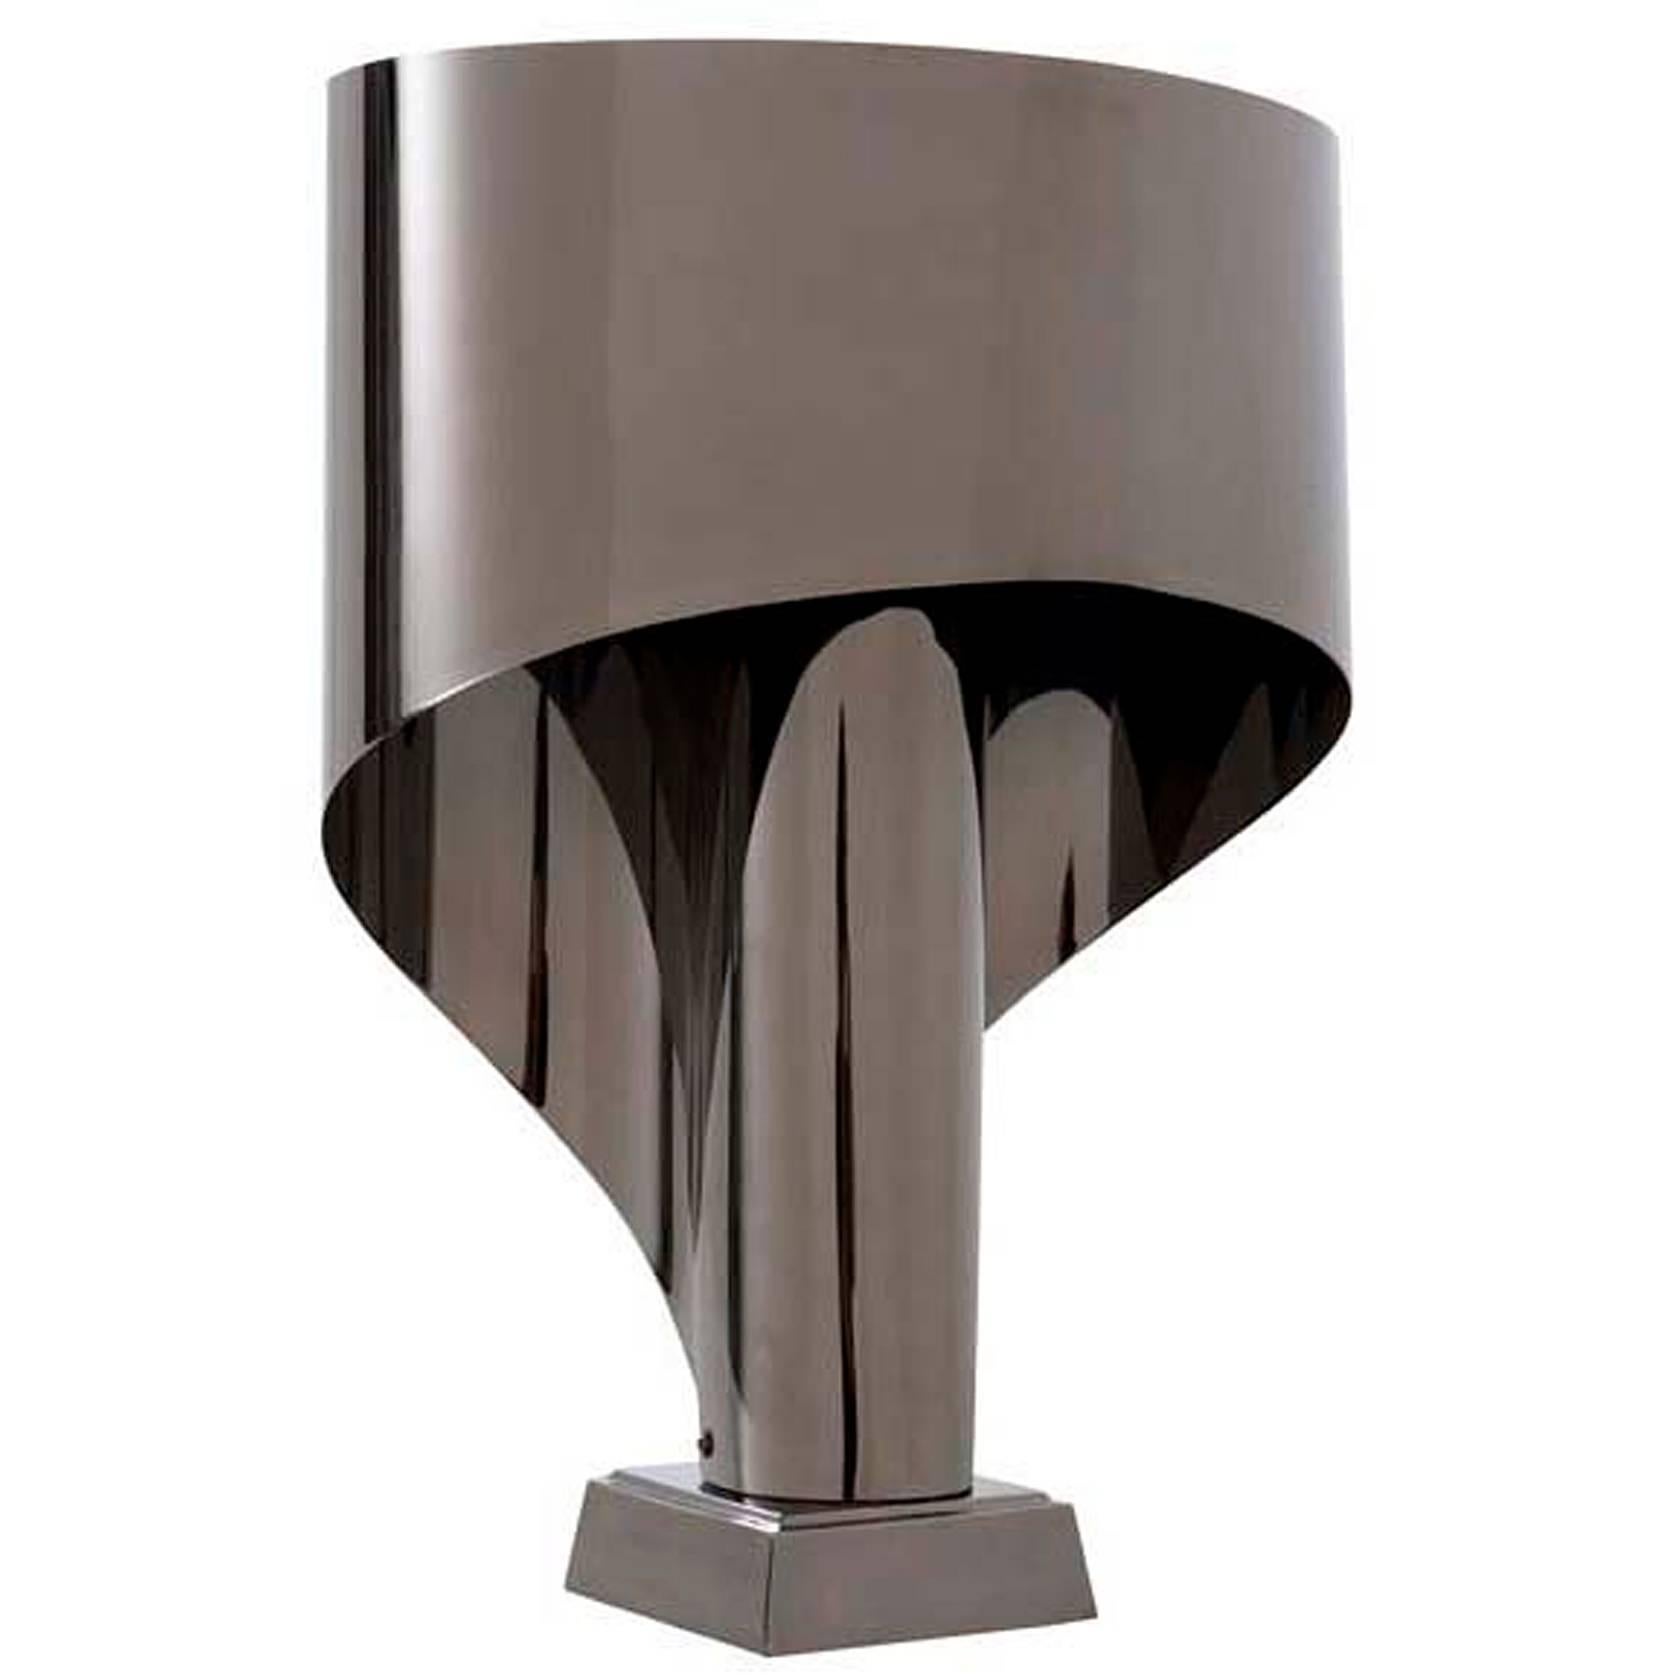 Miami Table Lamp in Black Nickel Finish